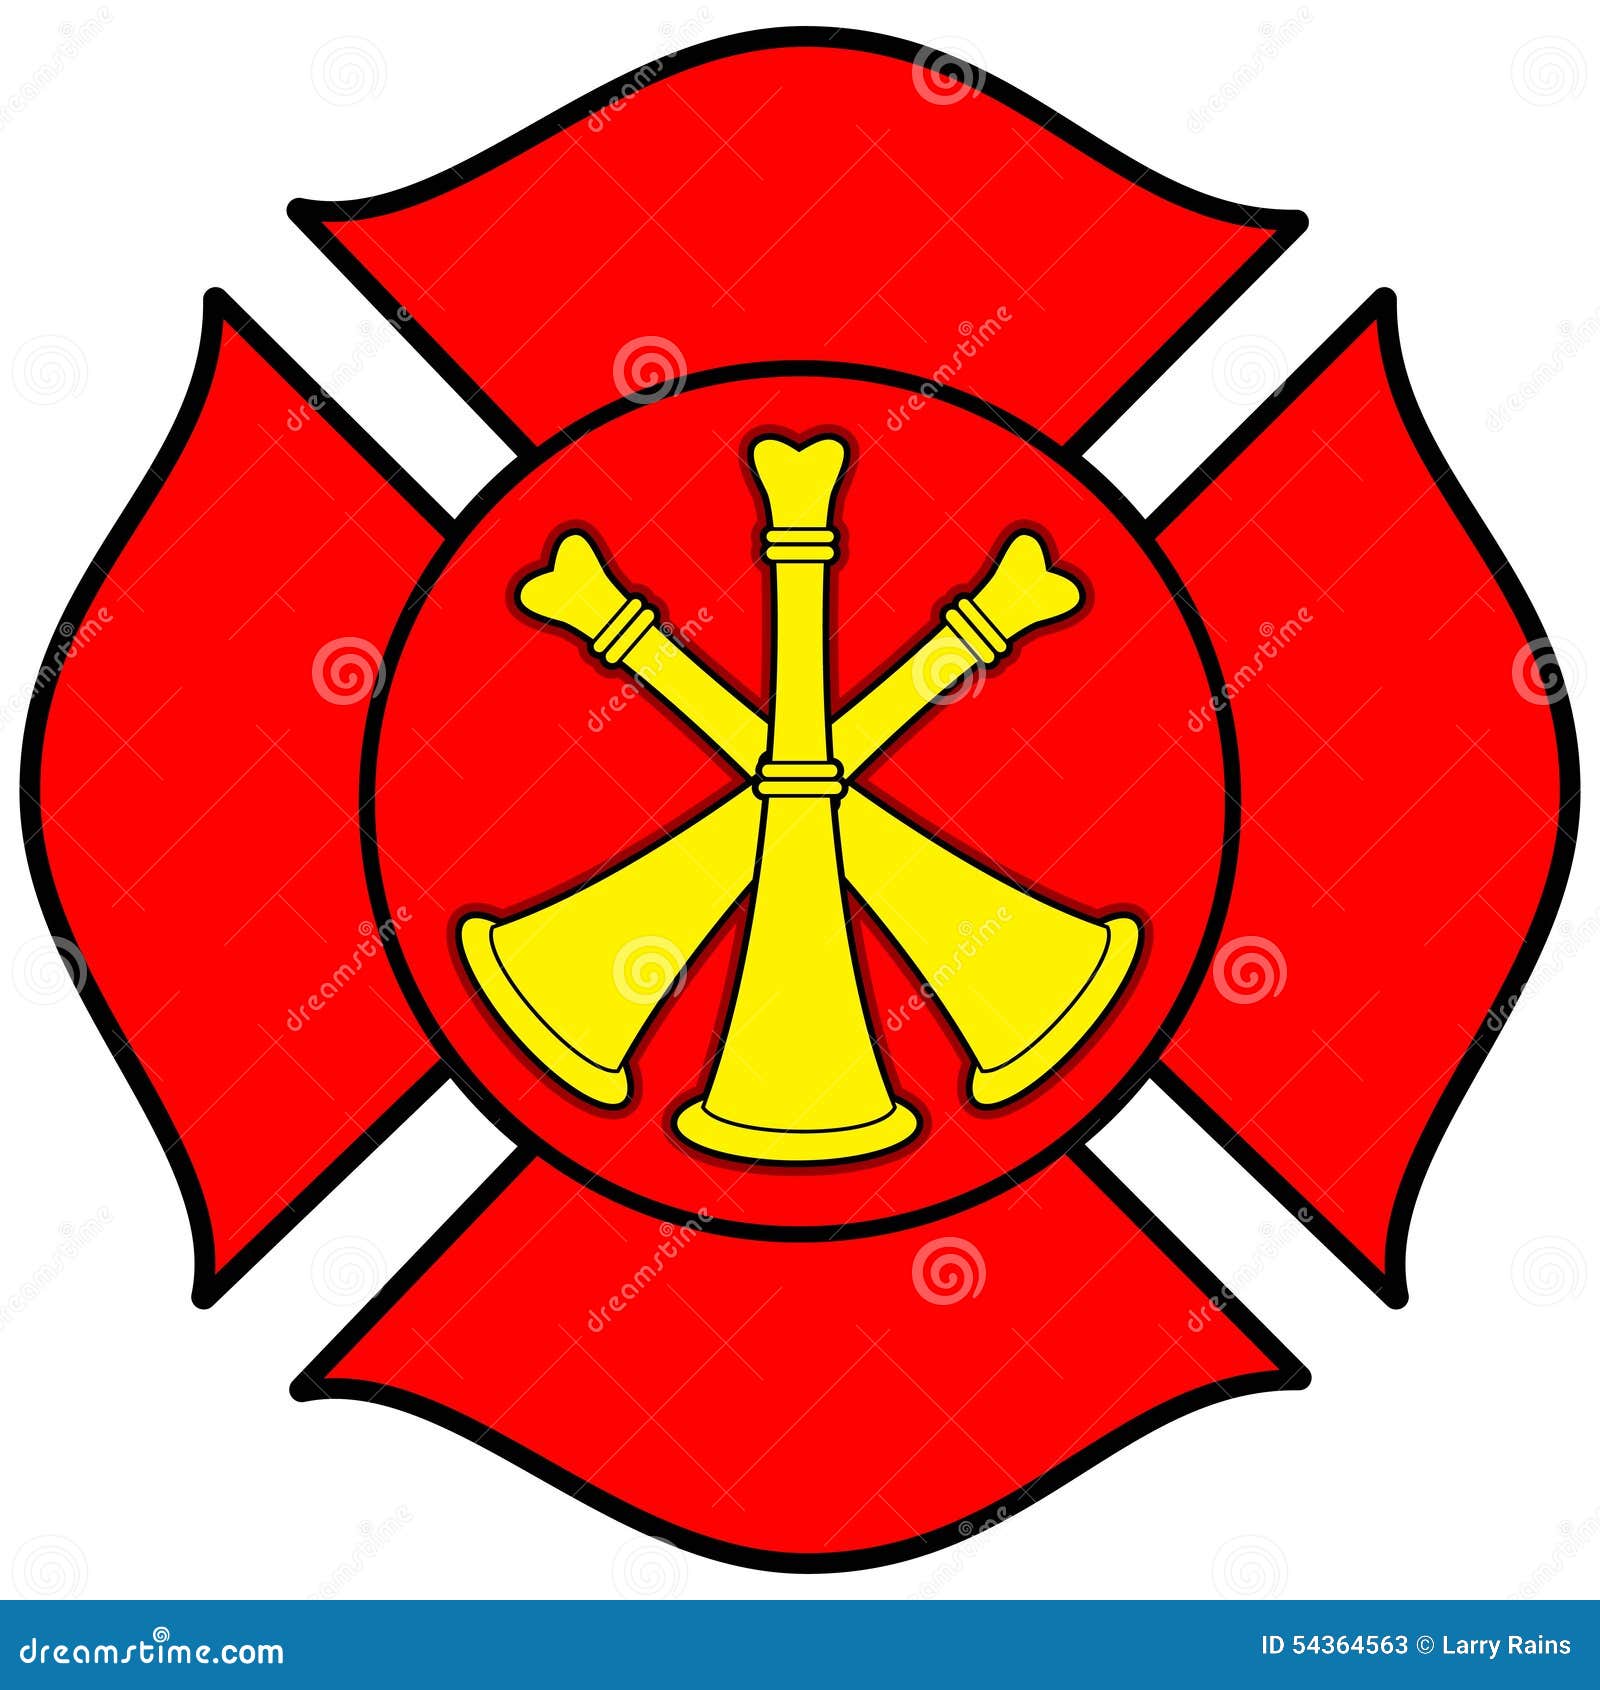 Firefighter Bugle Badge stock vector. Illustration of jumper - 54364563